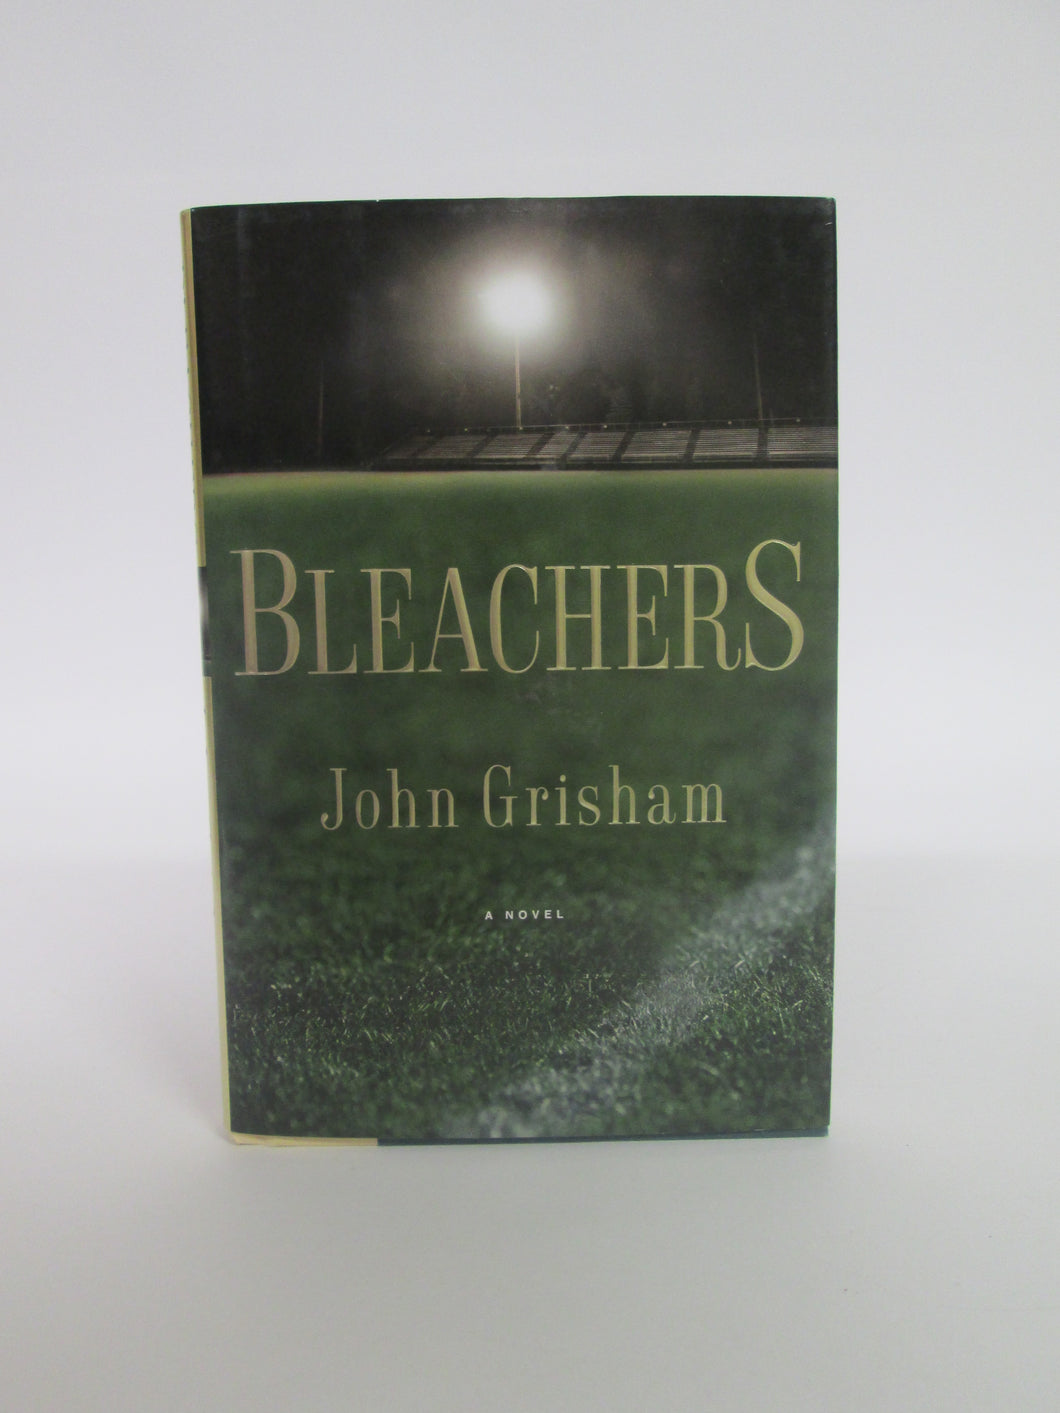 Bleachers by John Grisham (2003)